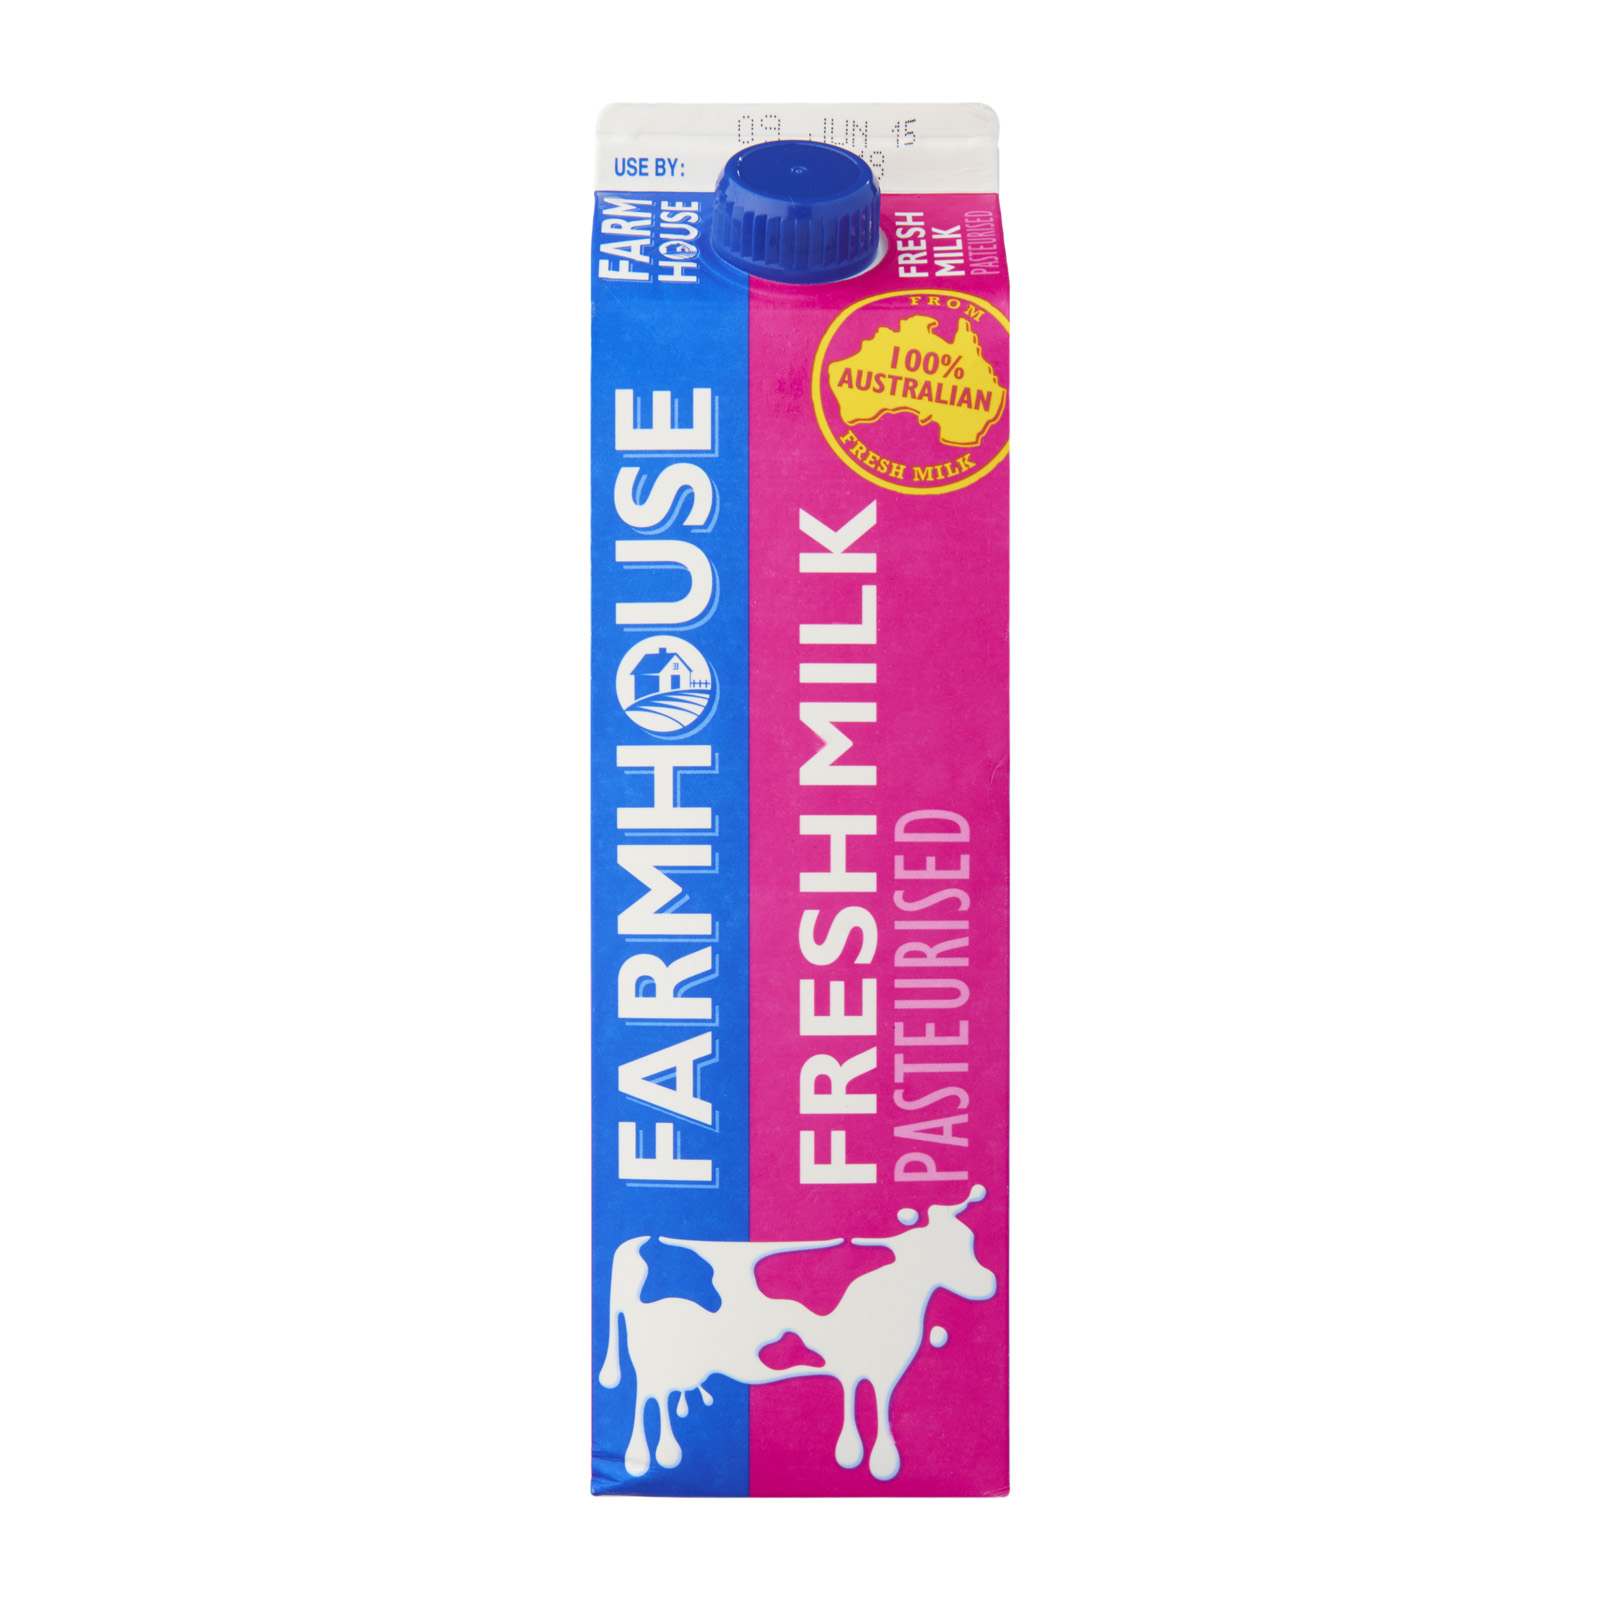 Farmhouse Fresh Milk 1l Lazada Singapore